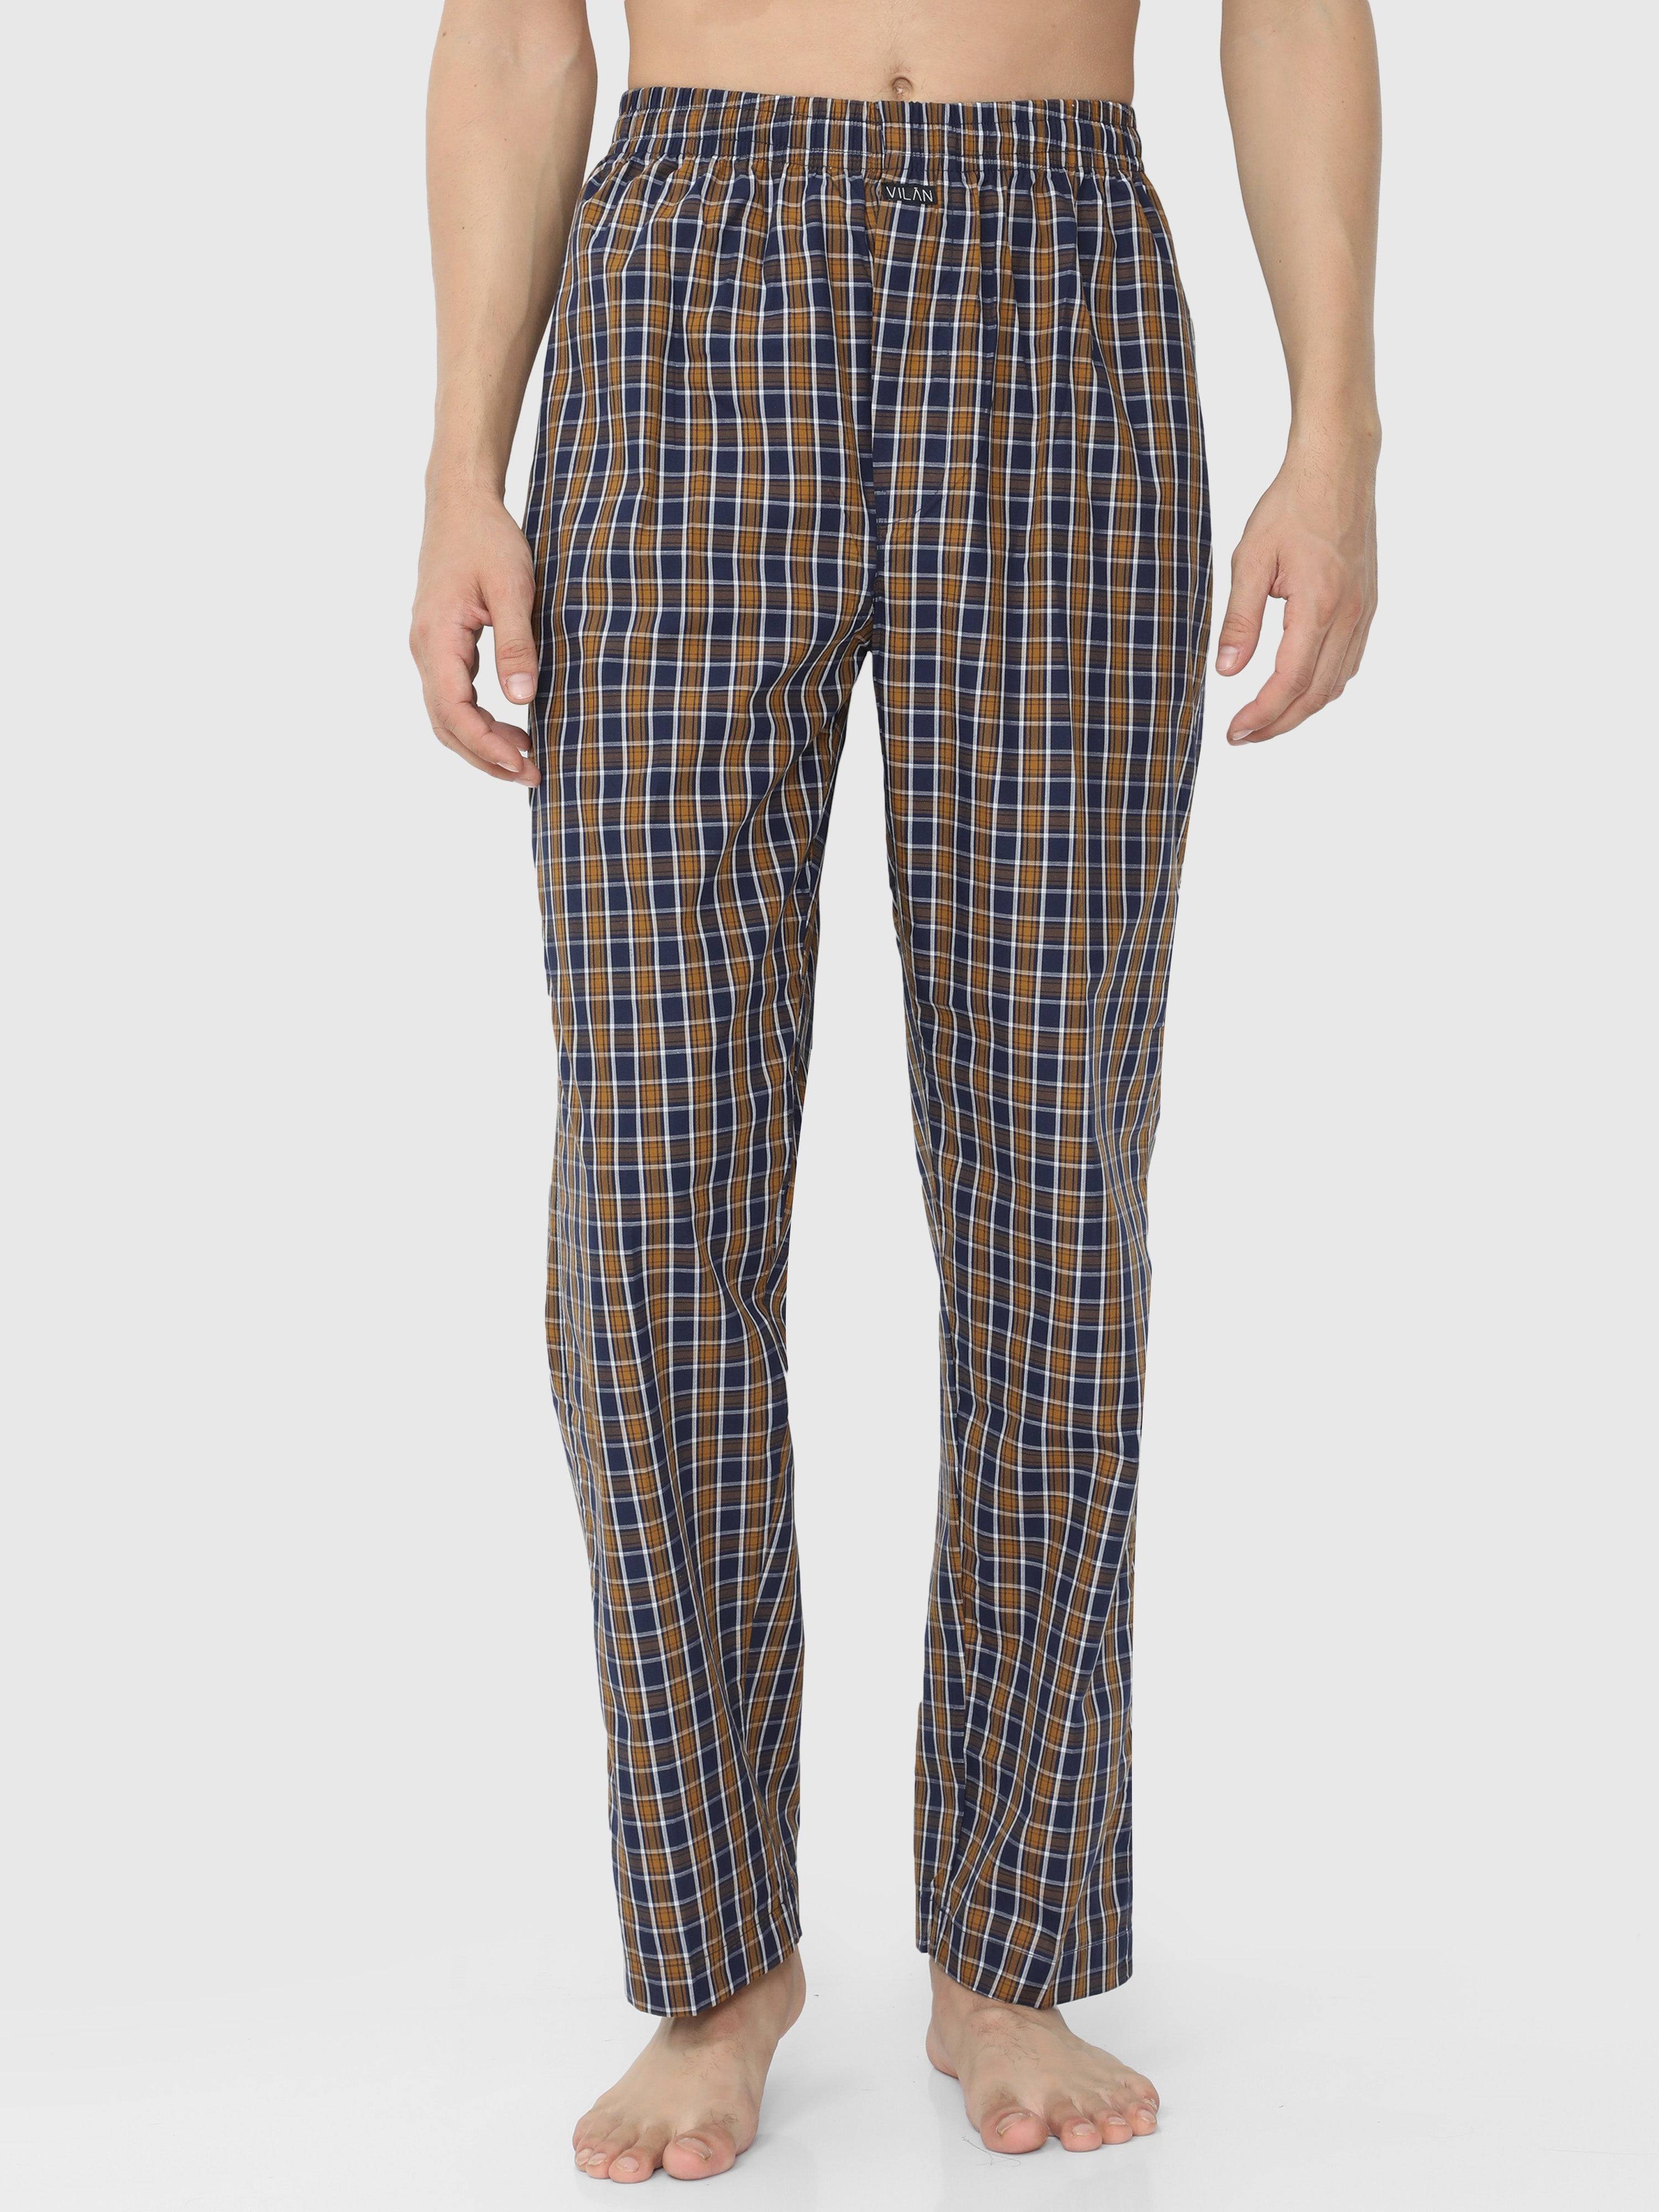 Men Cotton Pajama Pants Lounge Pockets Bottom Trousers Comfortable Sleepwear  New | eBay